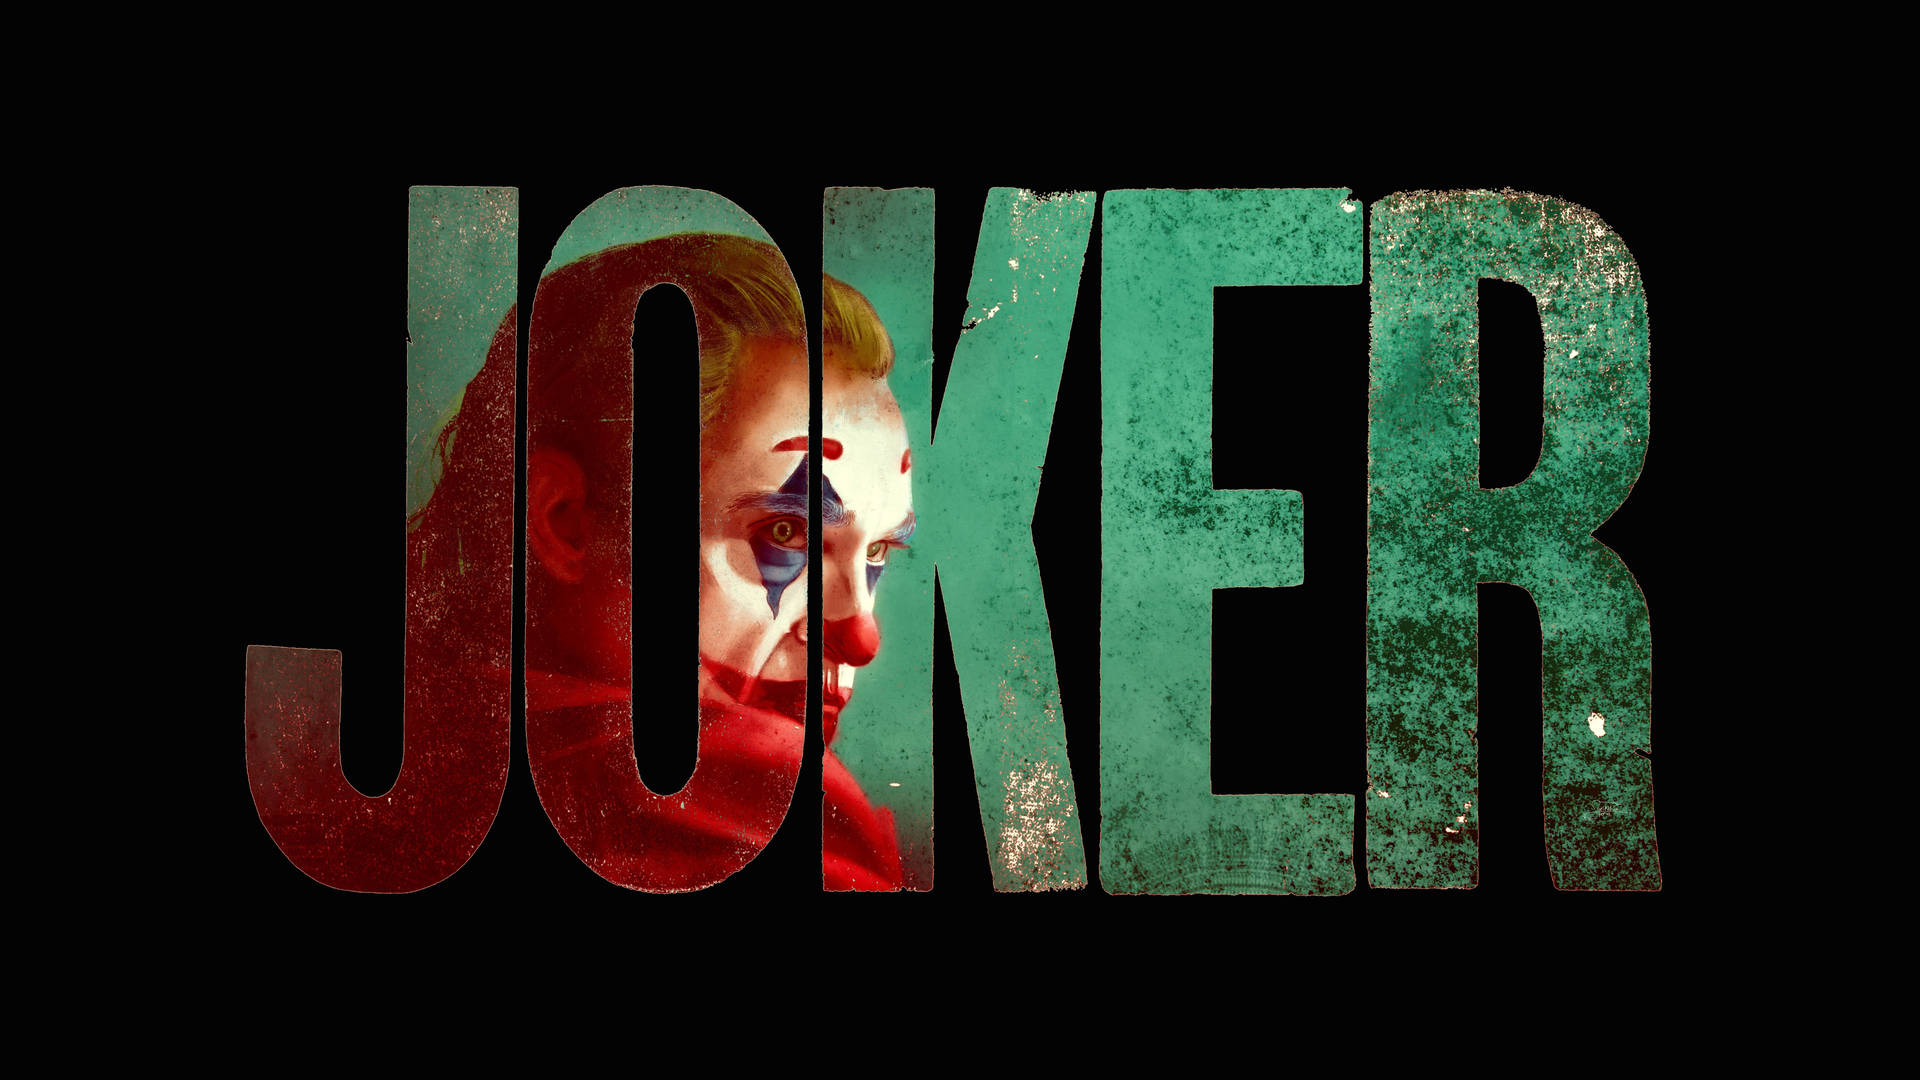 Black Ultra Hd Joker Poster Background